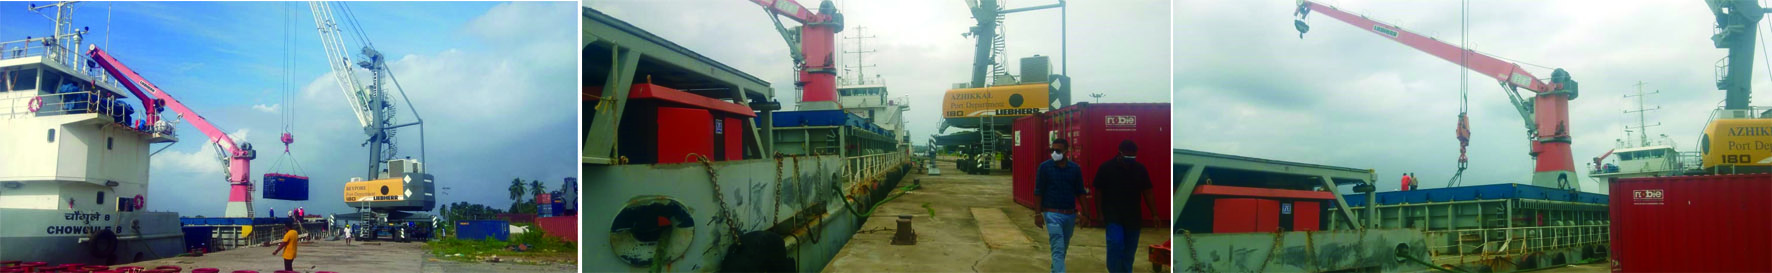 International cargo ship commenced 003